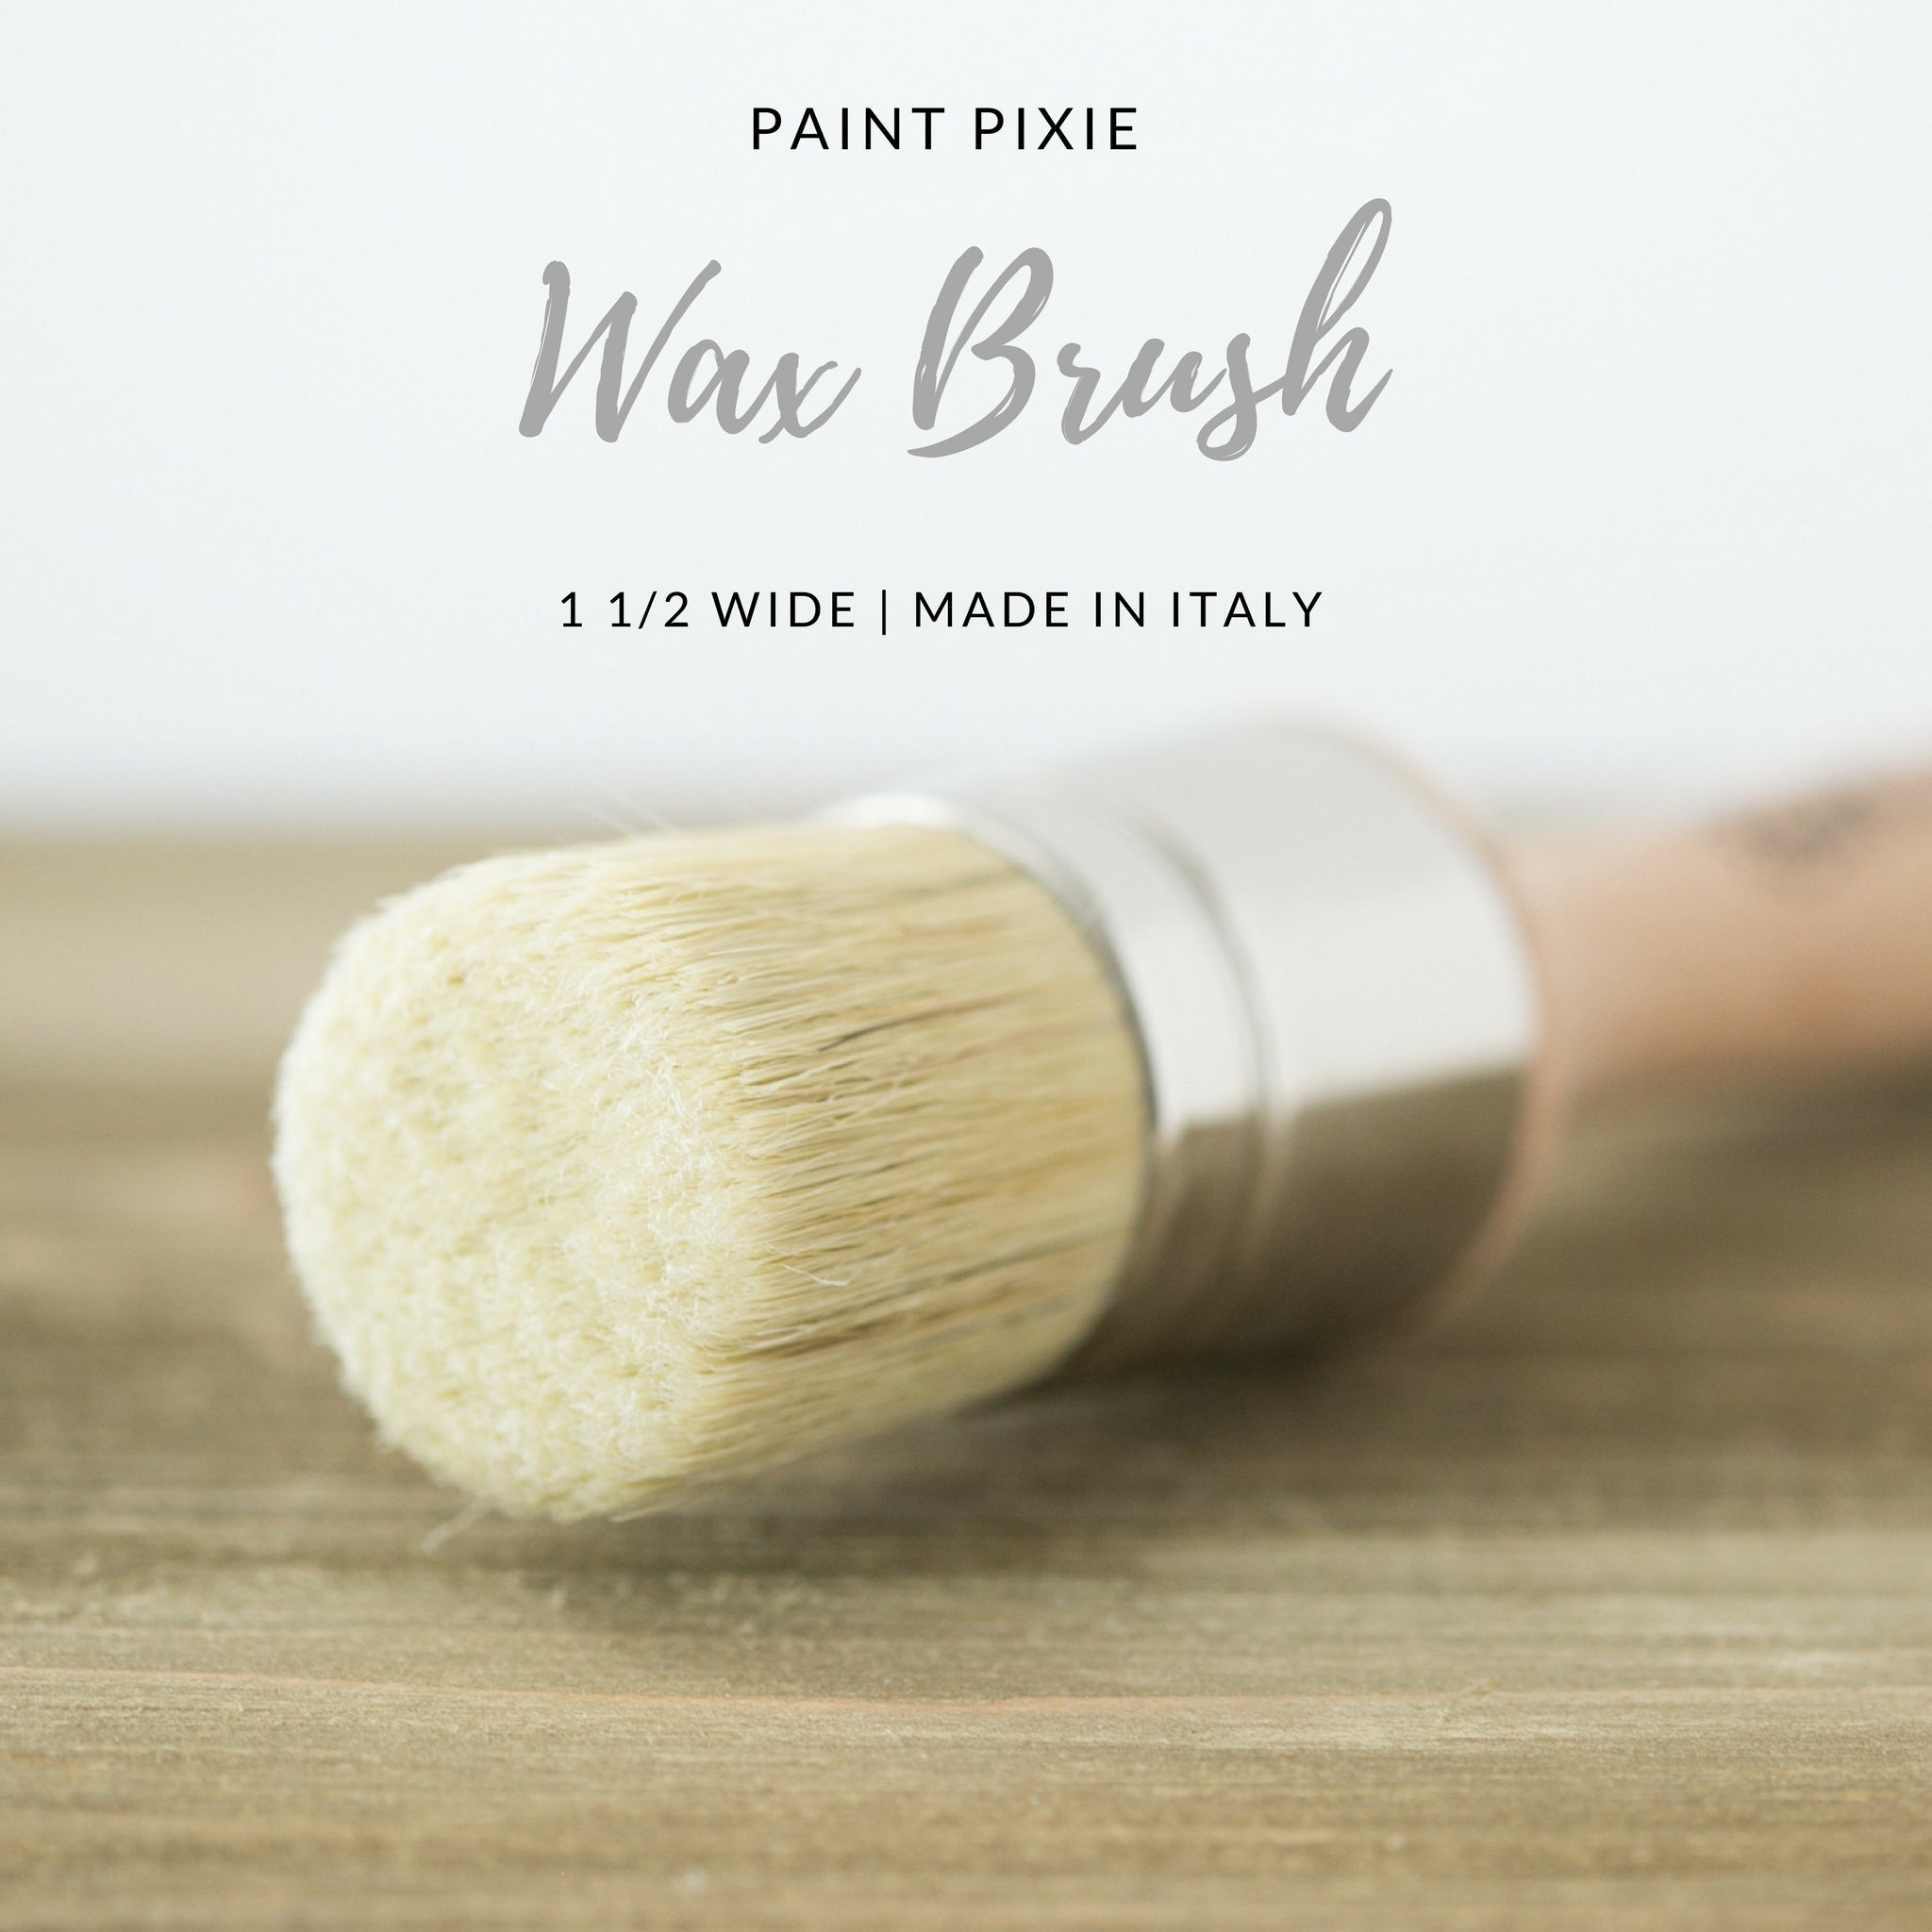 Paint Pixie Cera Large Wax Brush